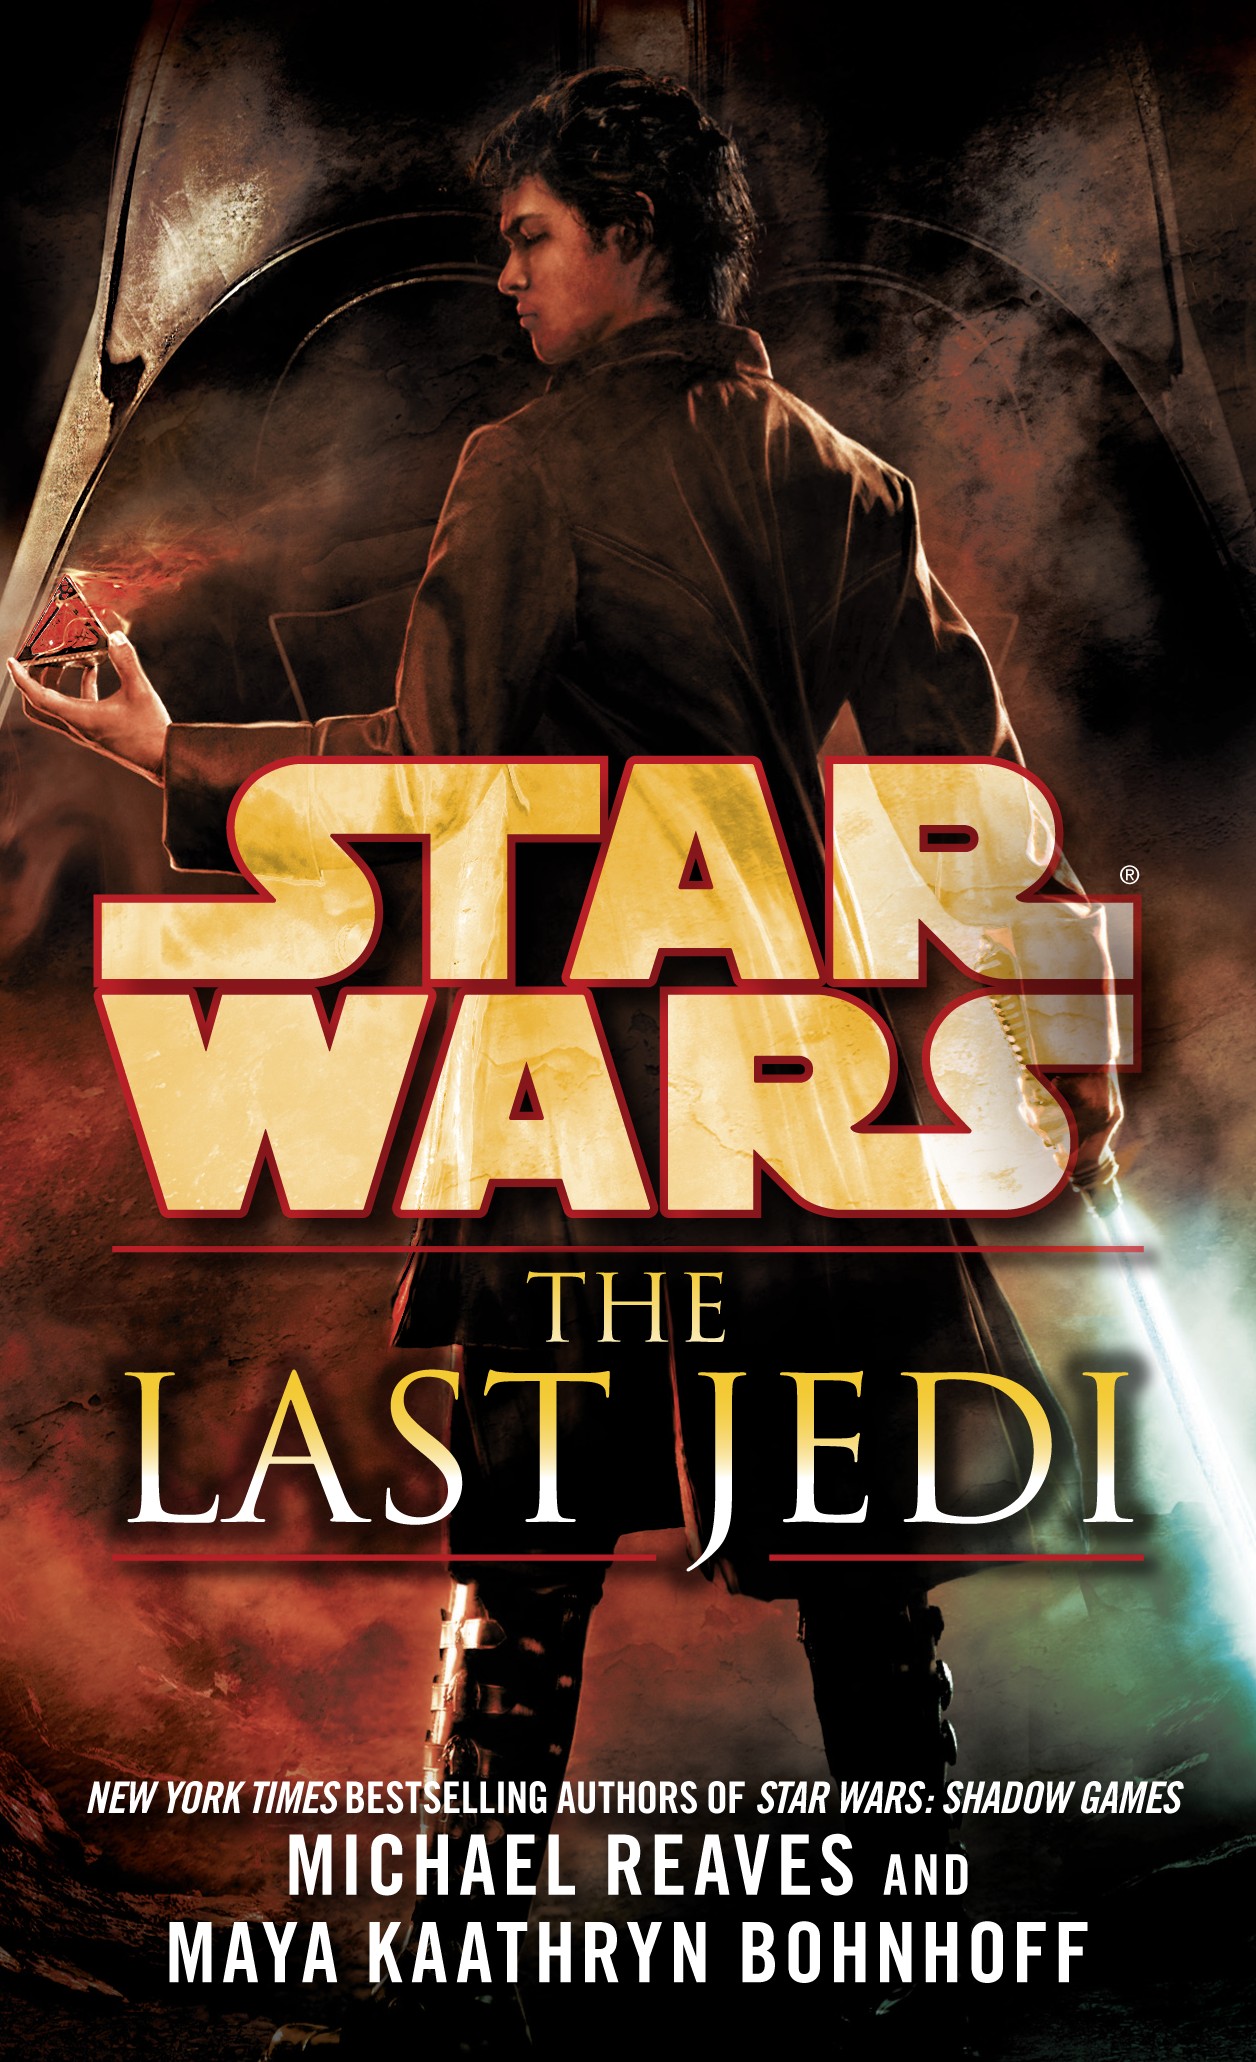 The Last Jedi (novel)